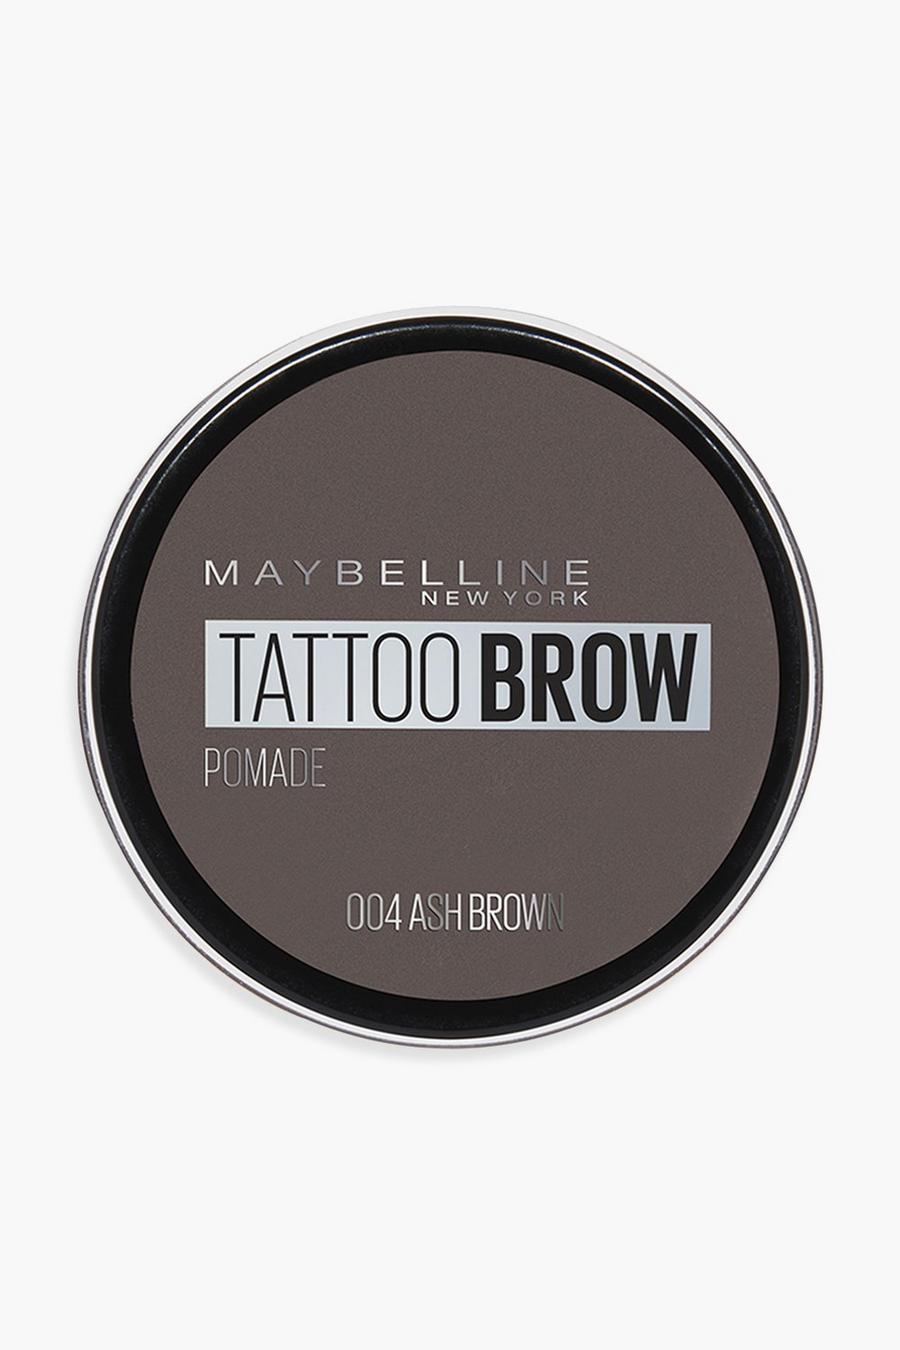 Crema tatuaje para cejas de Maybelline, 04 ash brown